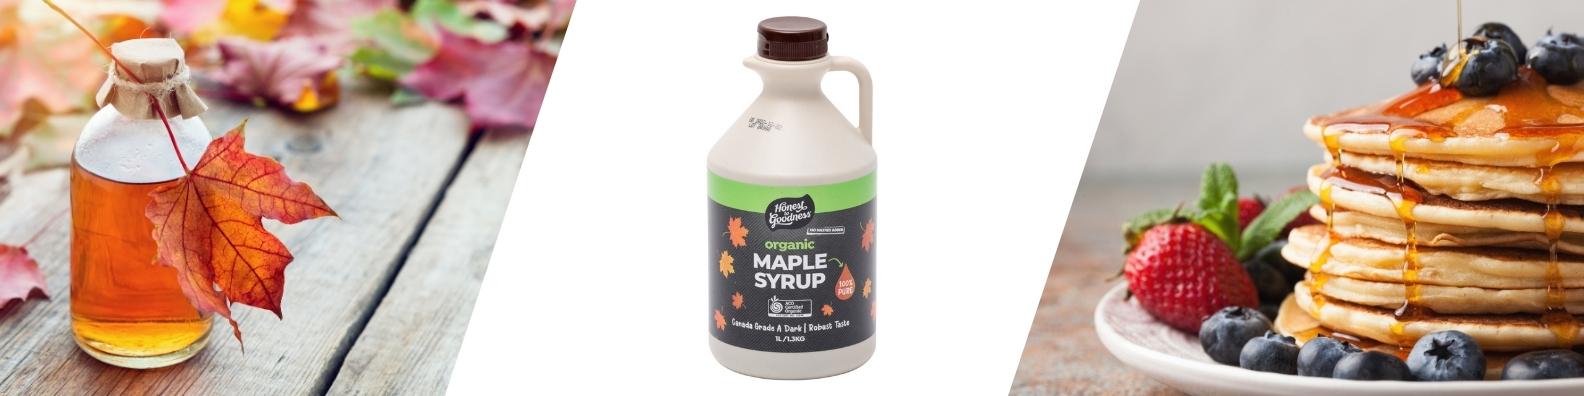 Maple Syrup - Blog Header